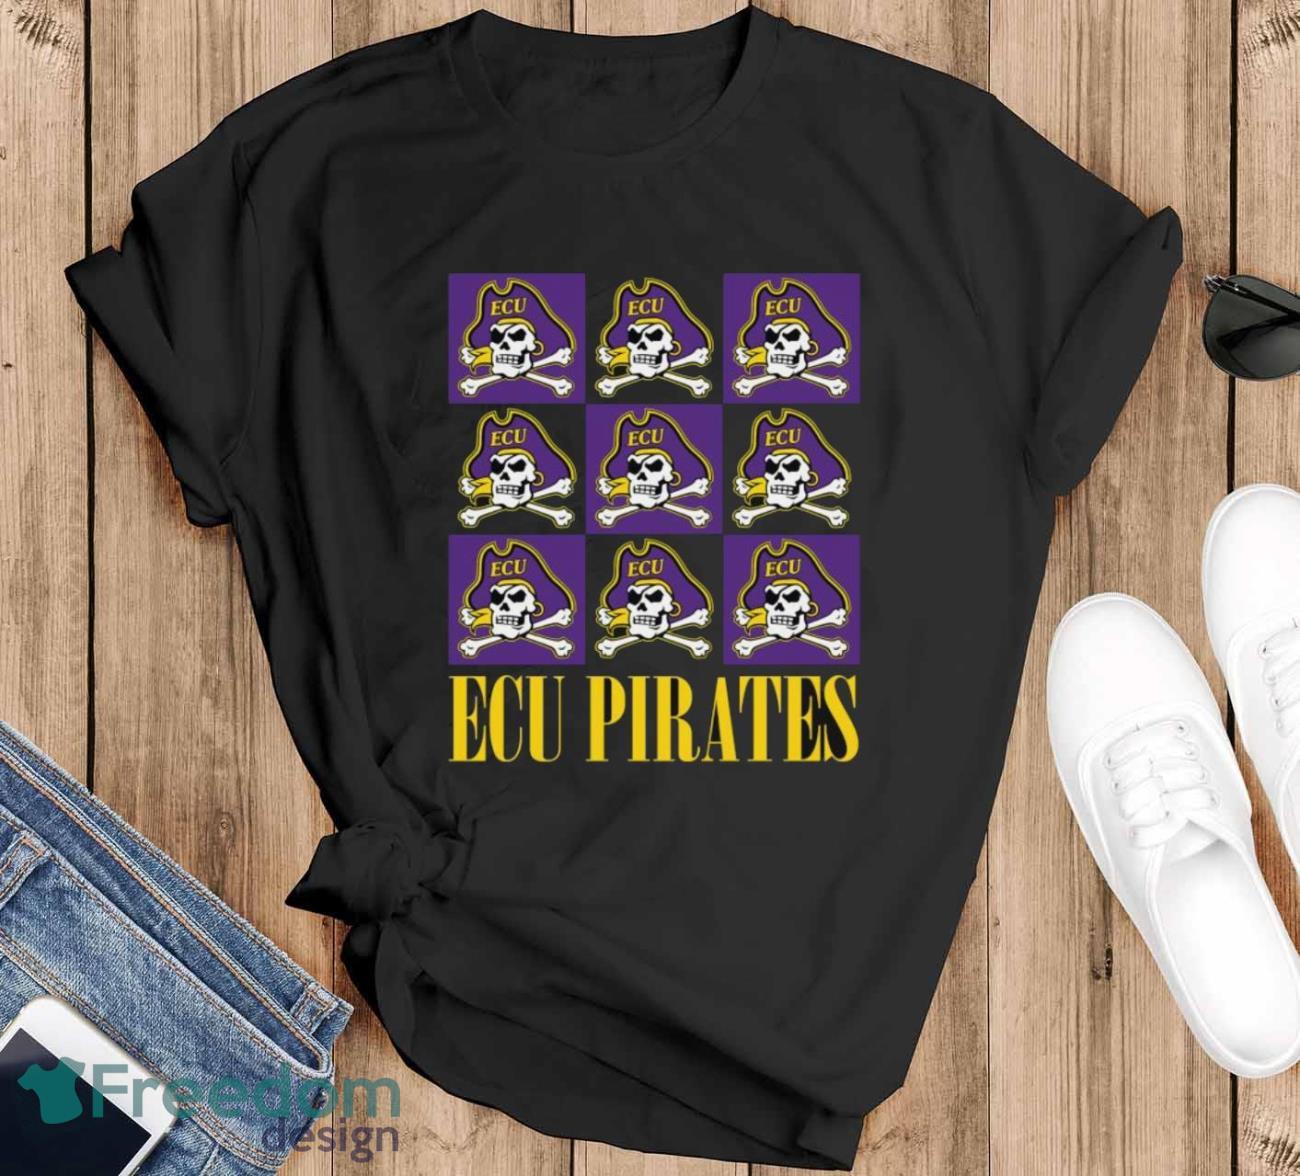 pirates t shirt design